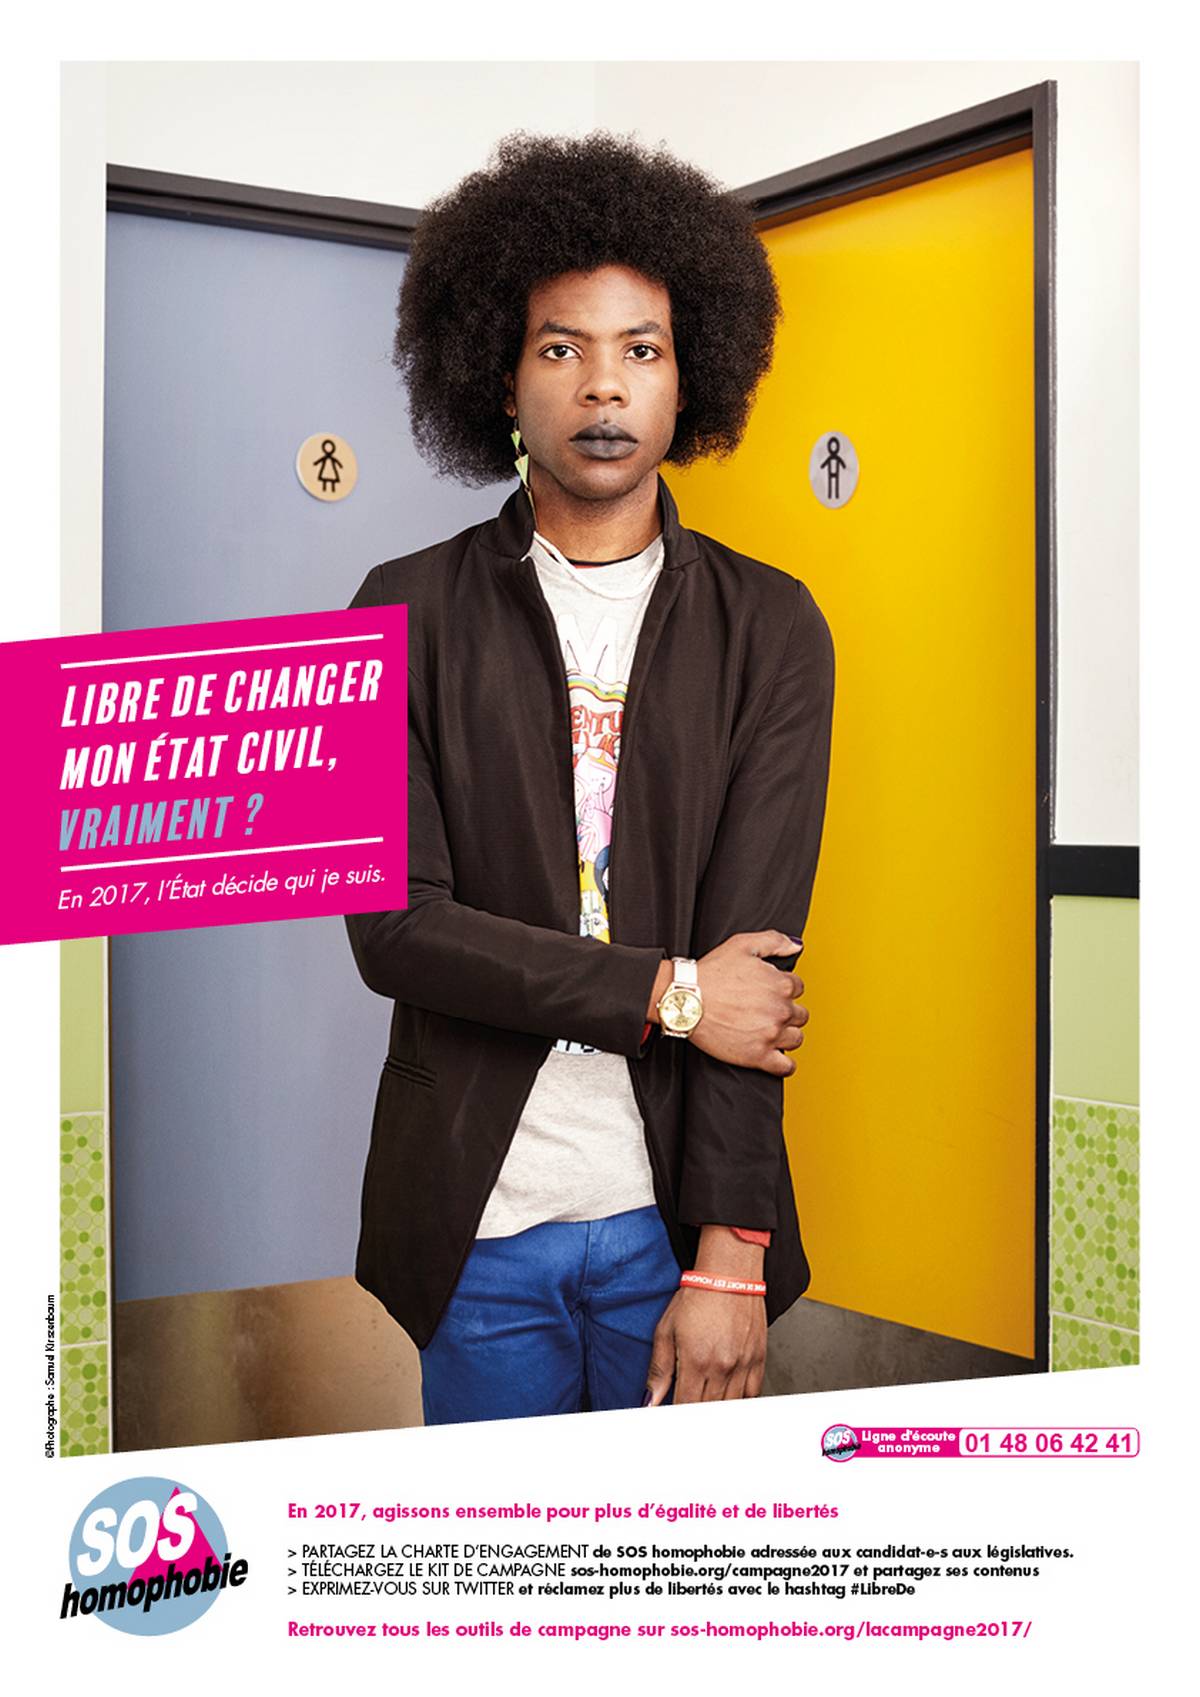 SOS homophobie nouvelle campagne #LibreDe